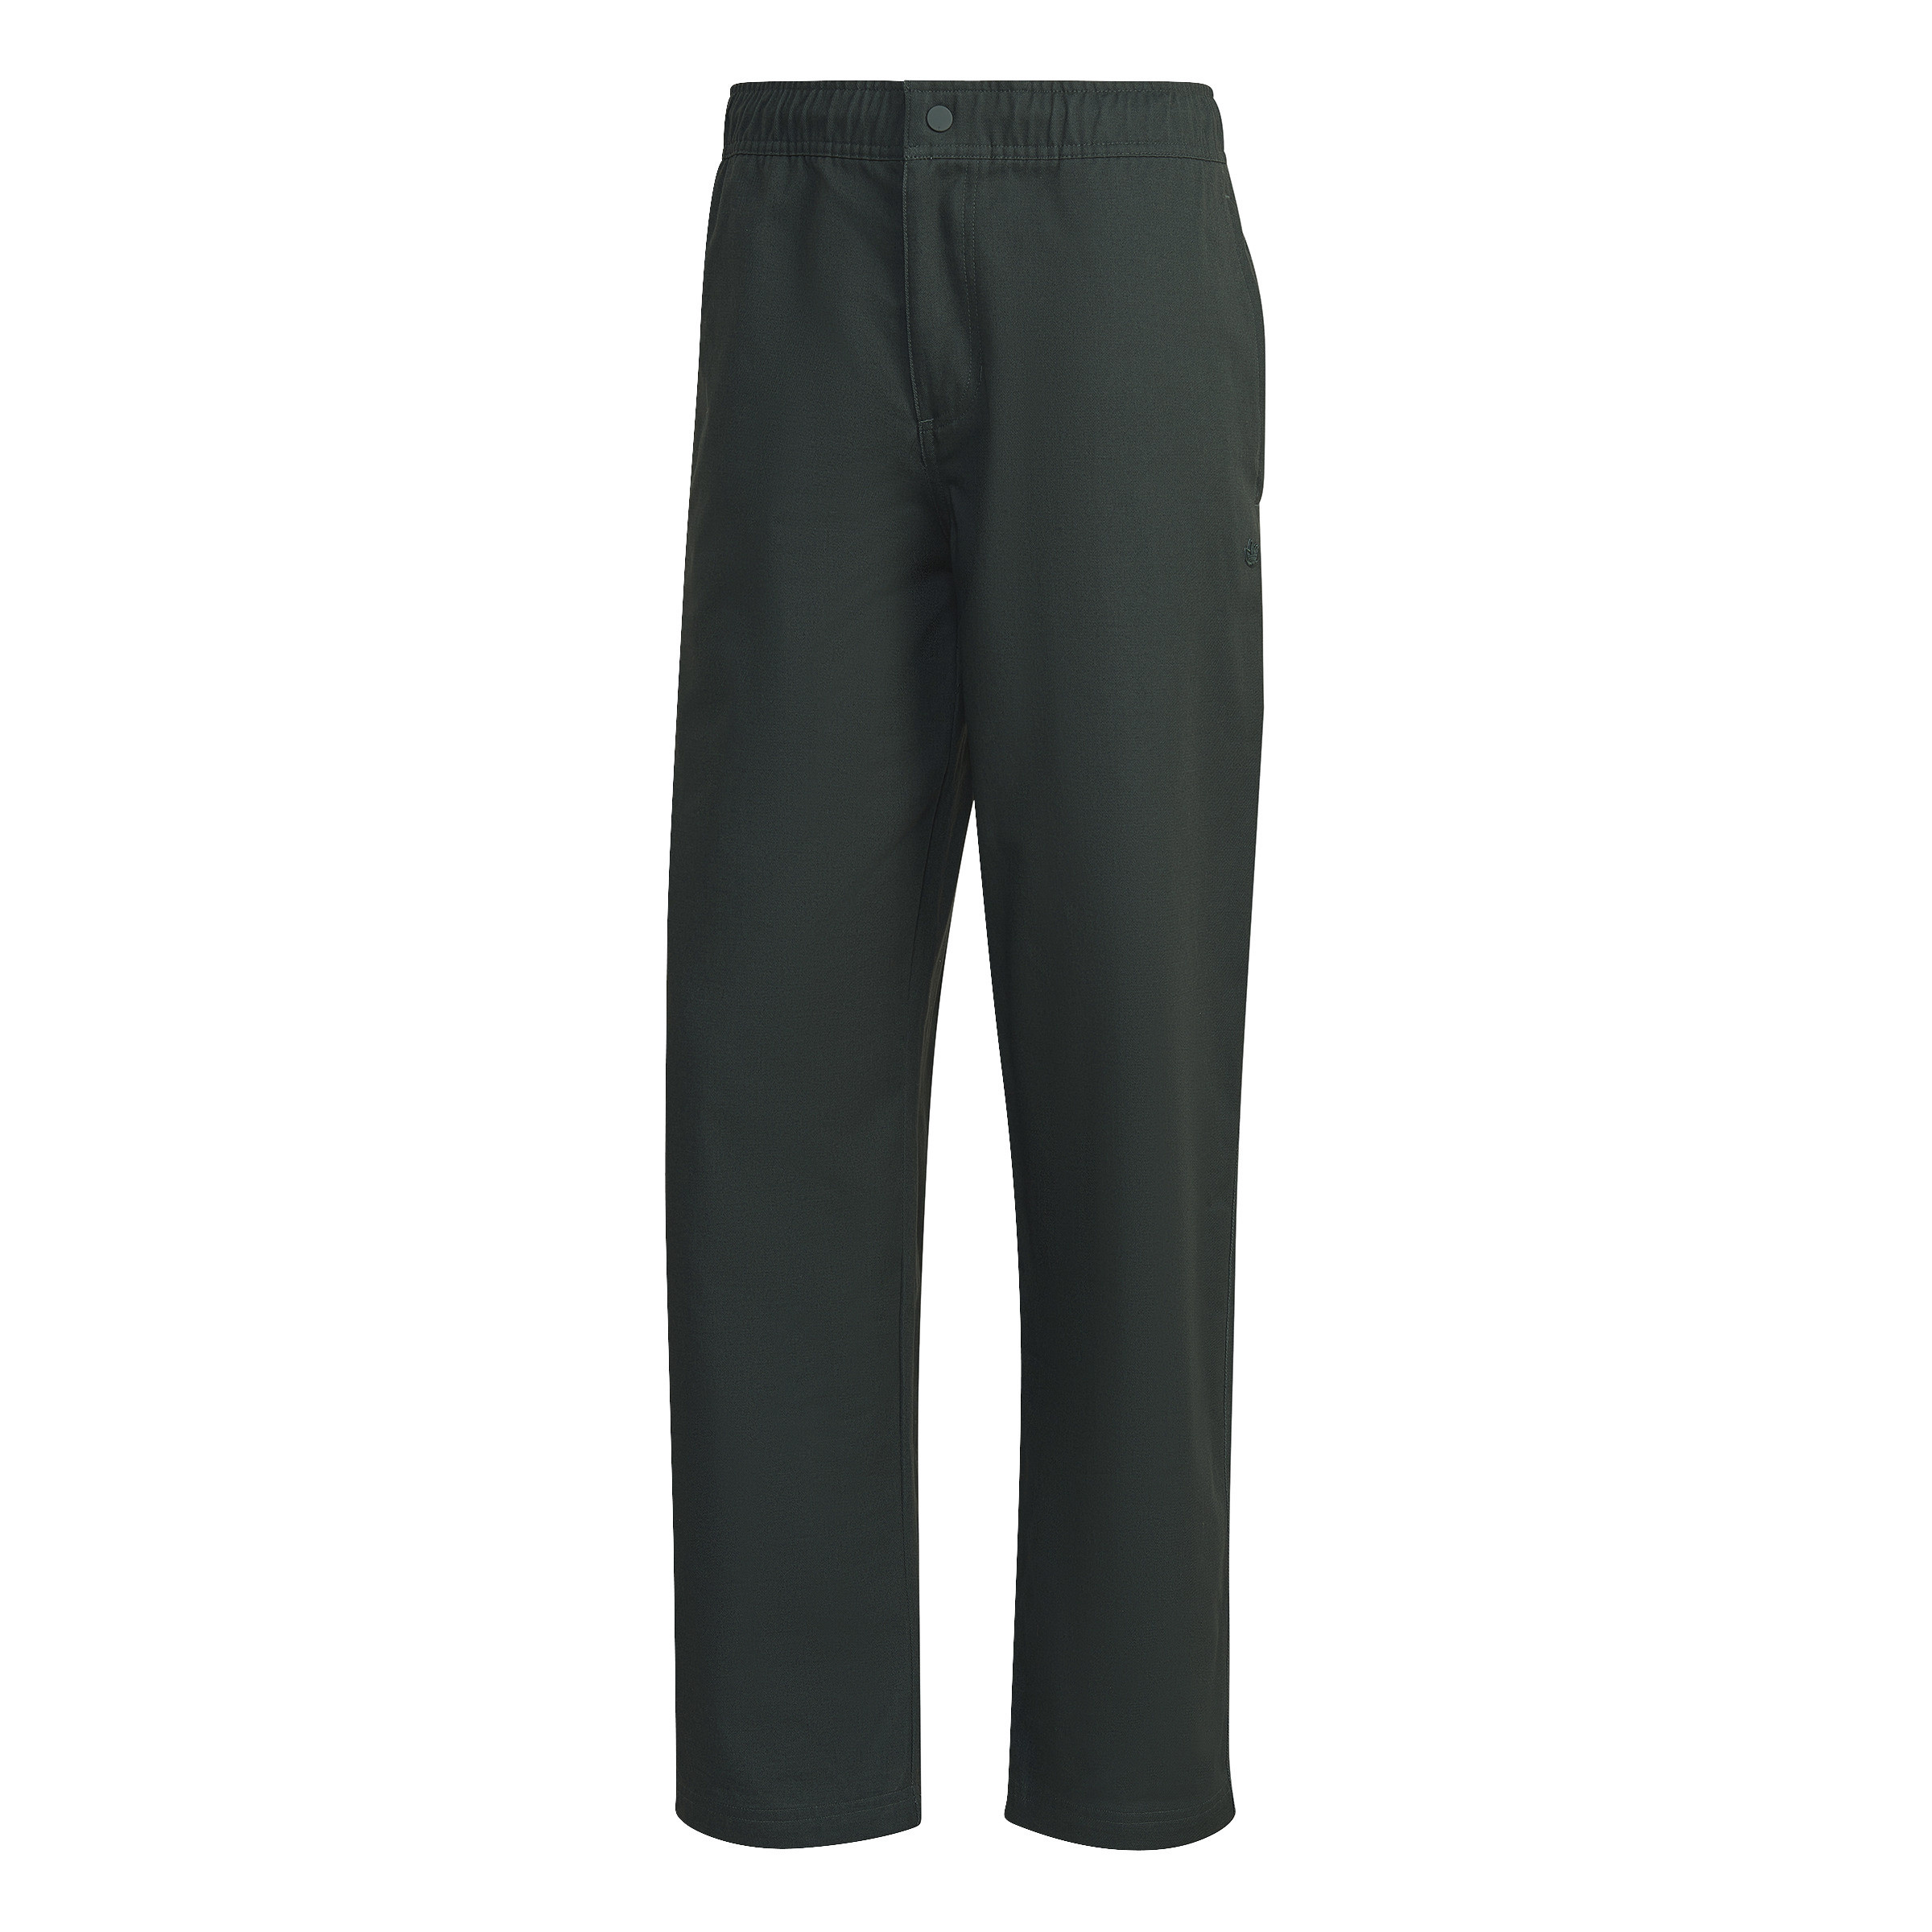 Adidas - Pantaloni adicolor chino, Verde scuro, large image number 0